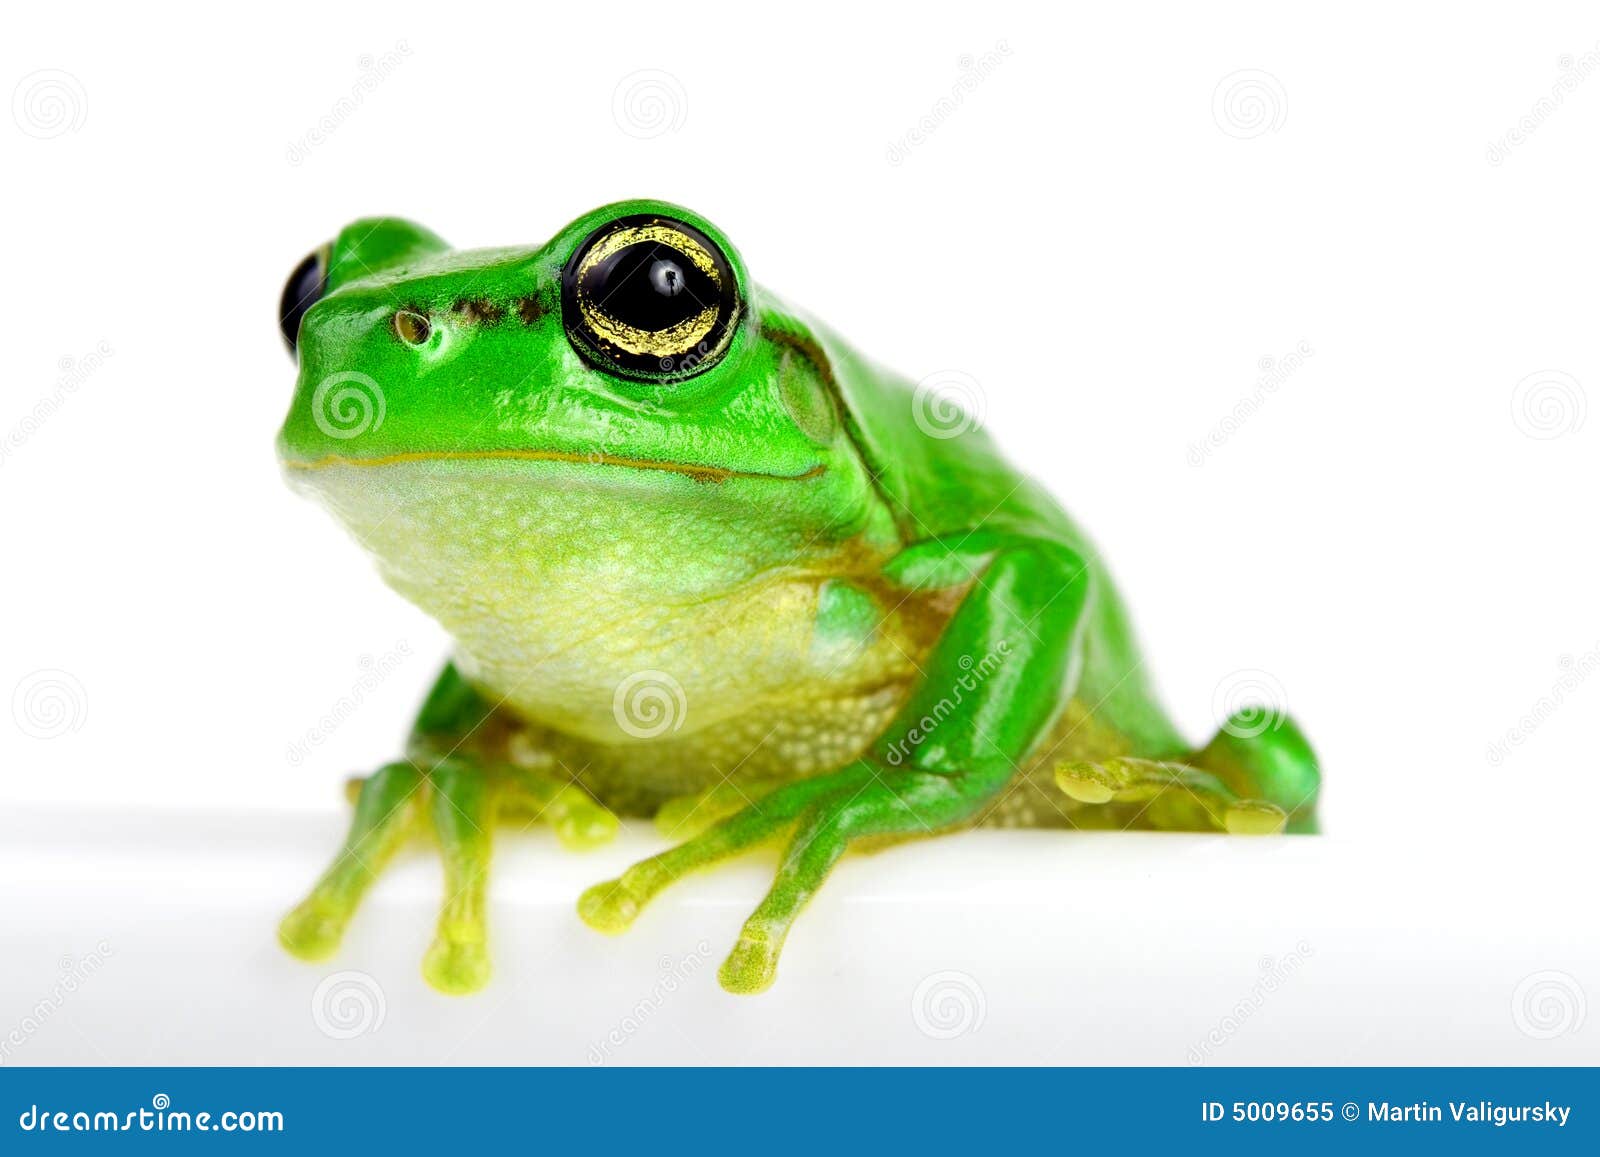 little tree frog white background 5009655